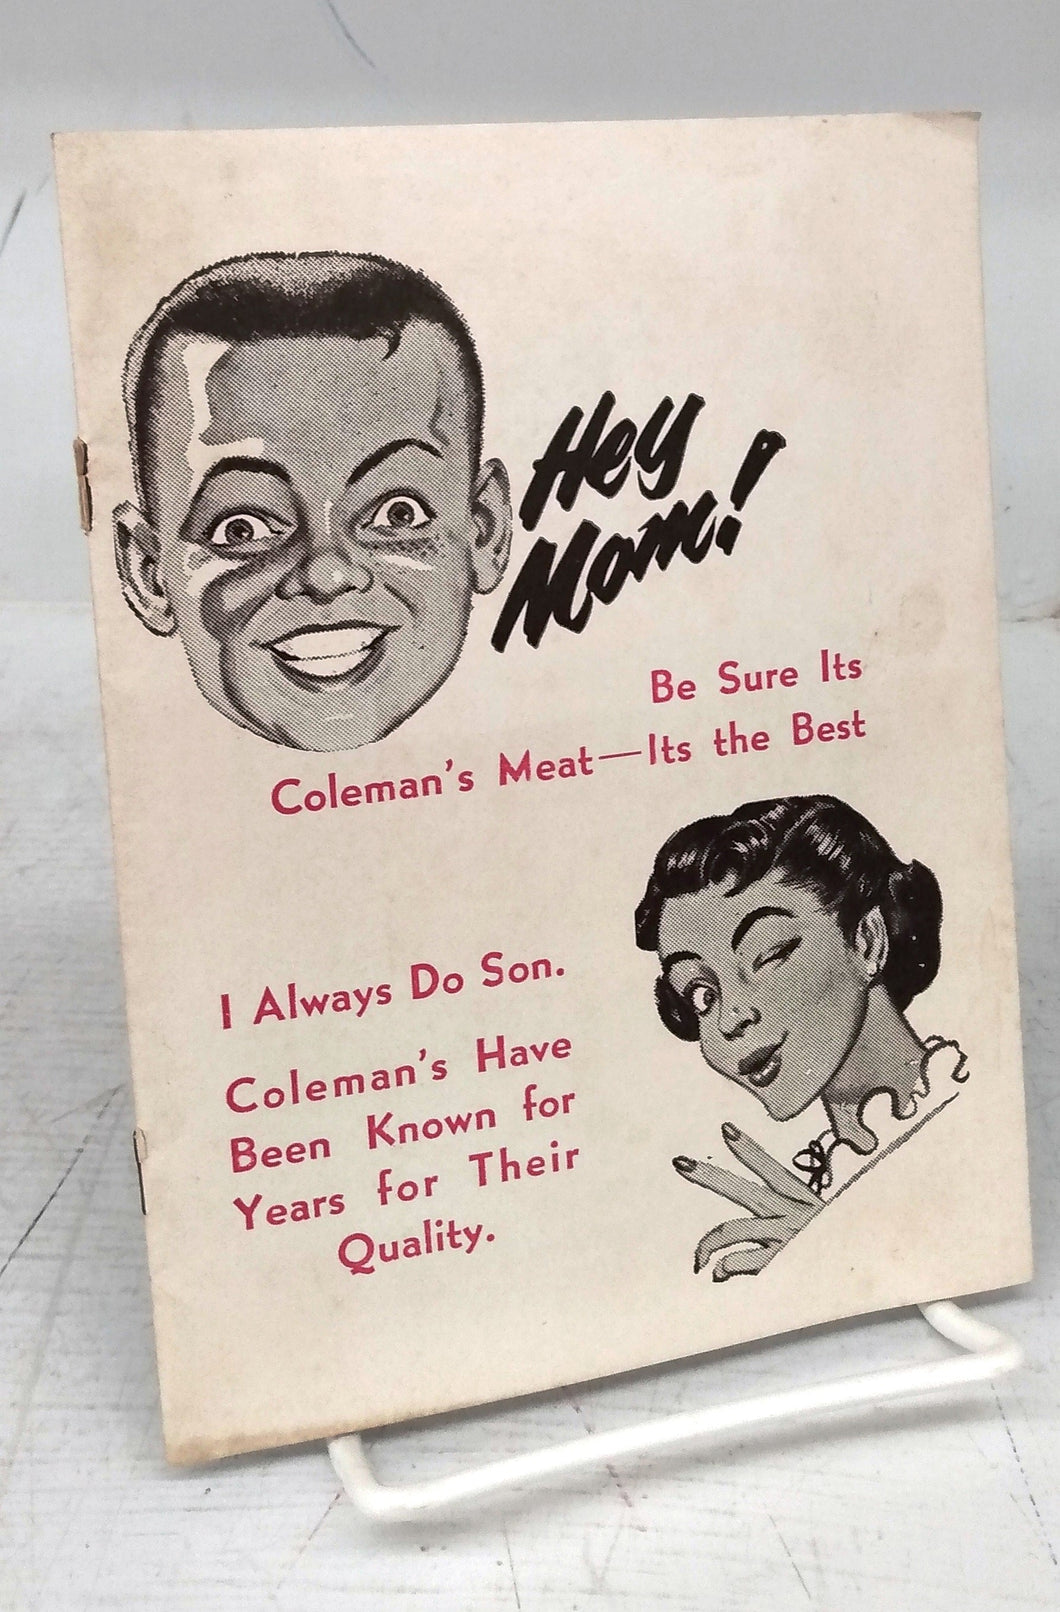 Coleman's Meats booklet